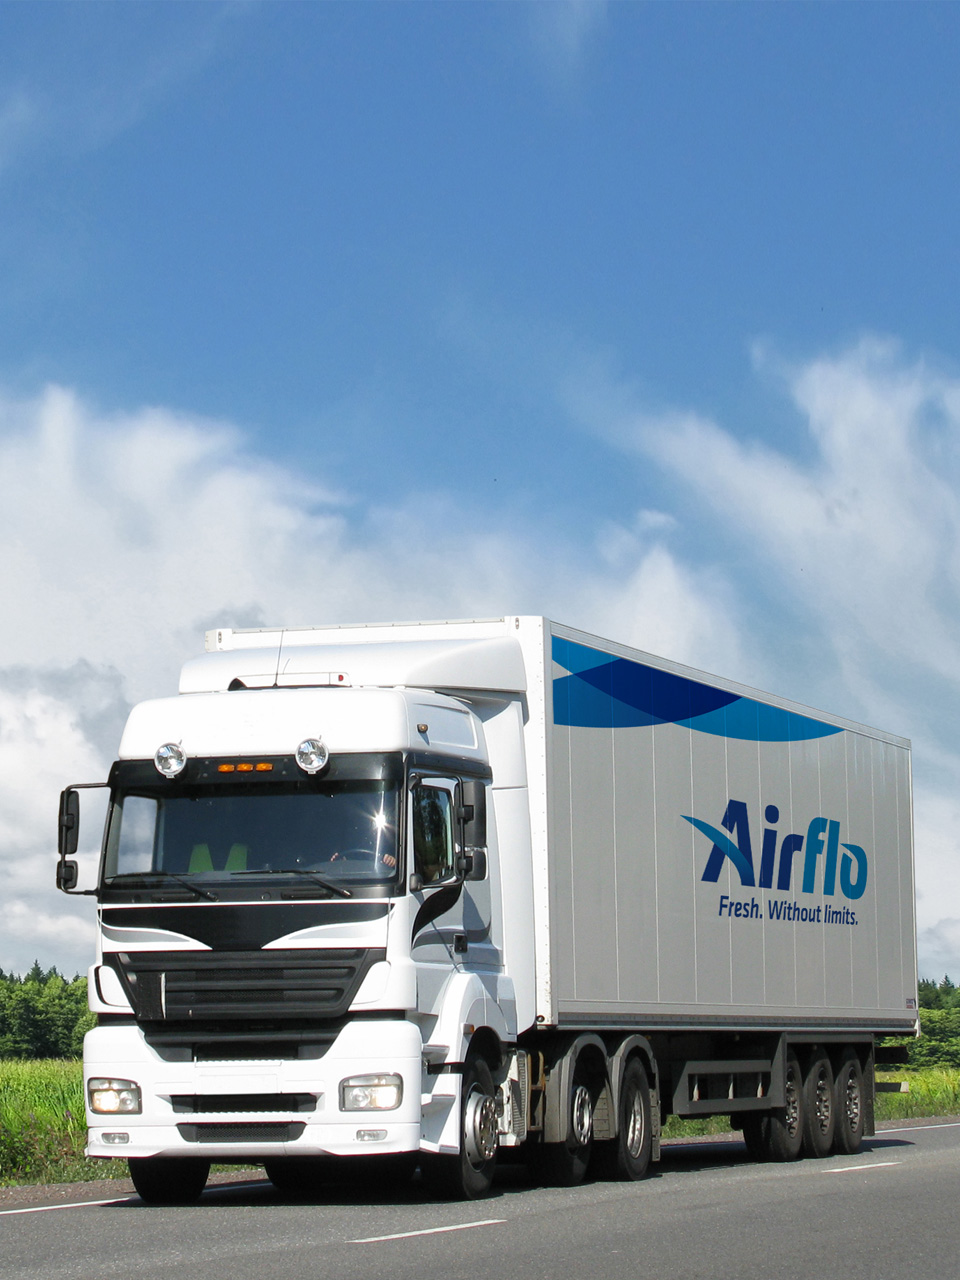 Transport of perishable products - Airflo